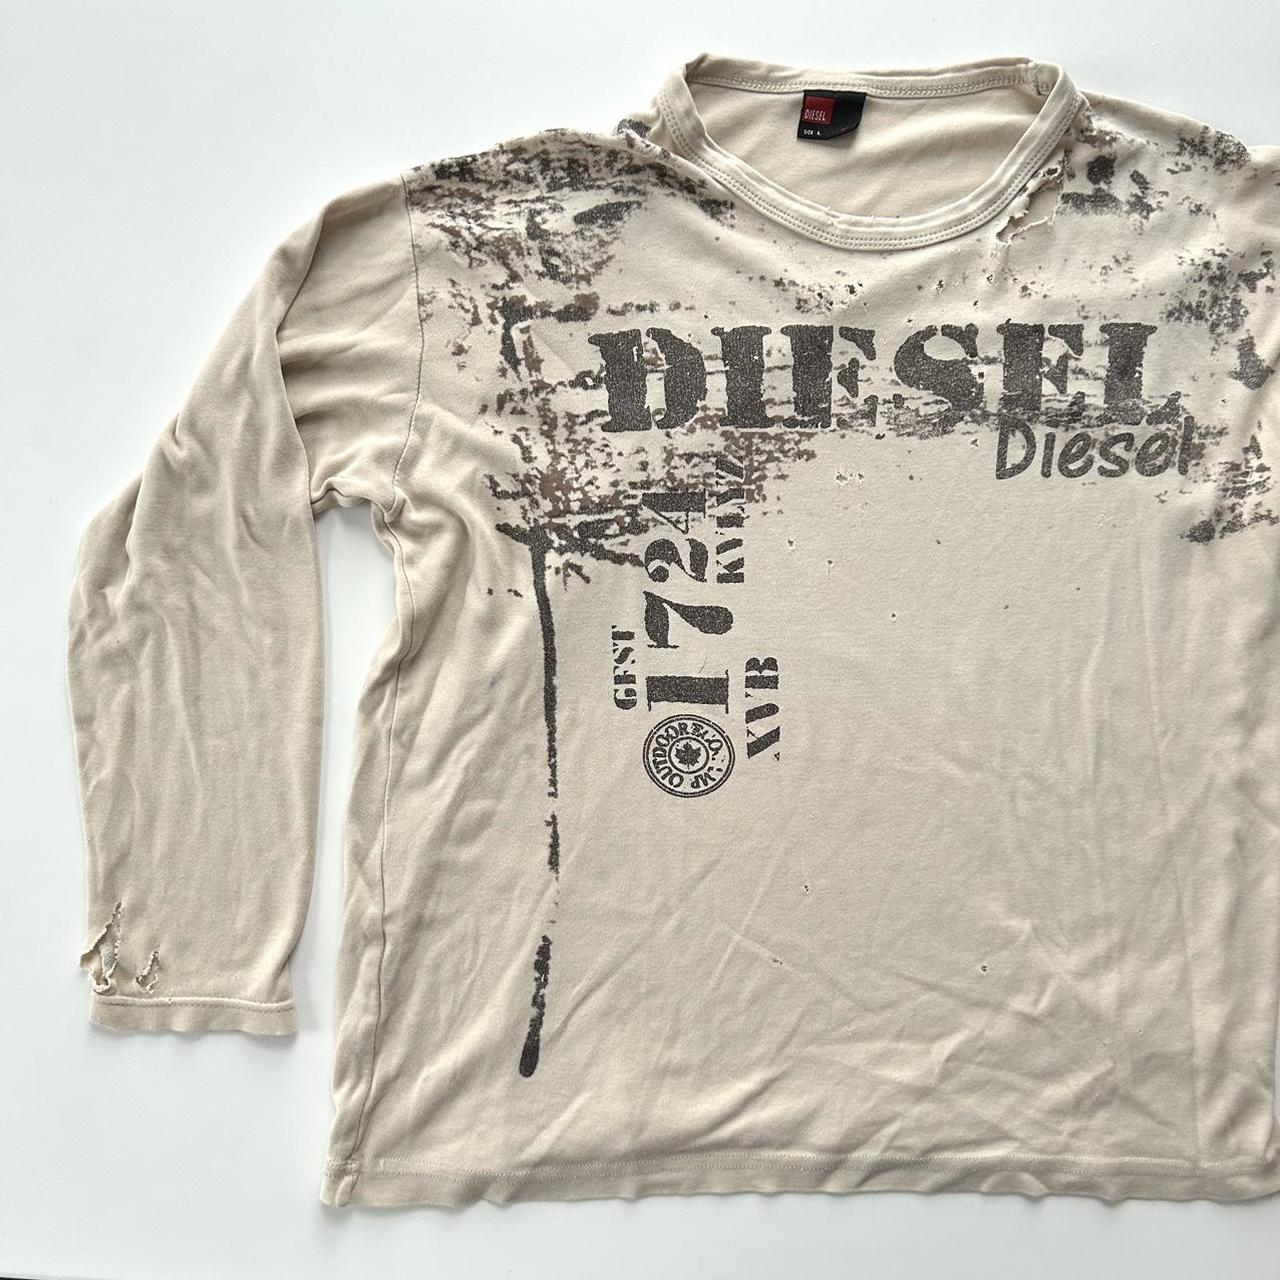 Diesel Women's Cream and Black T-shirt (3)